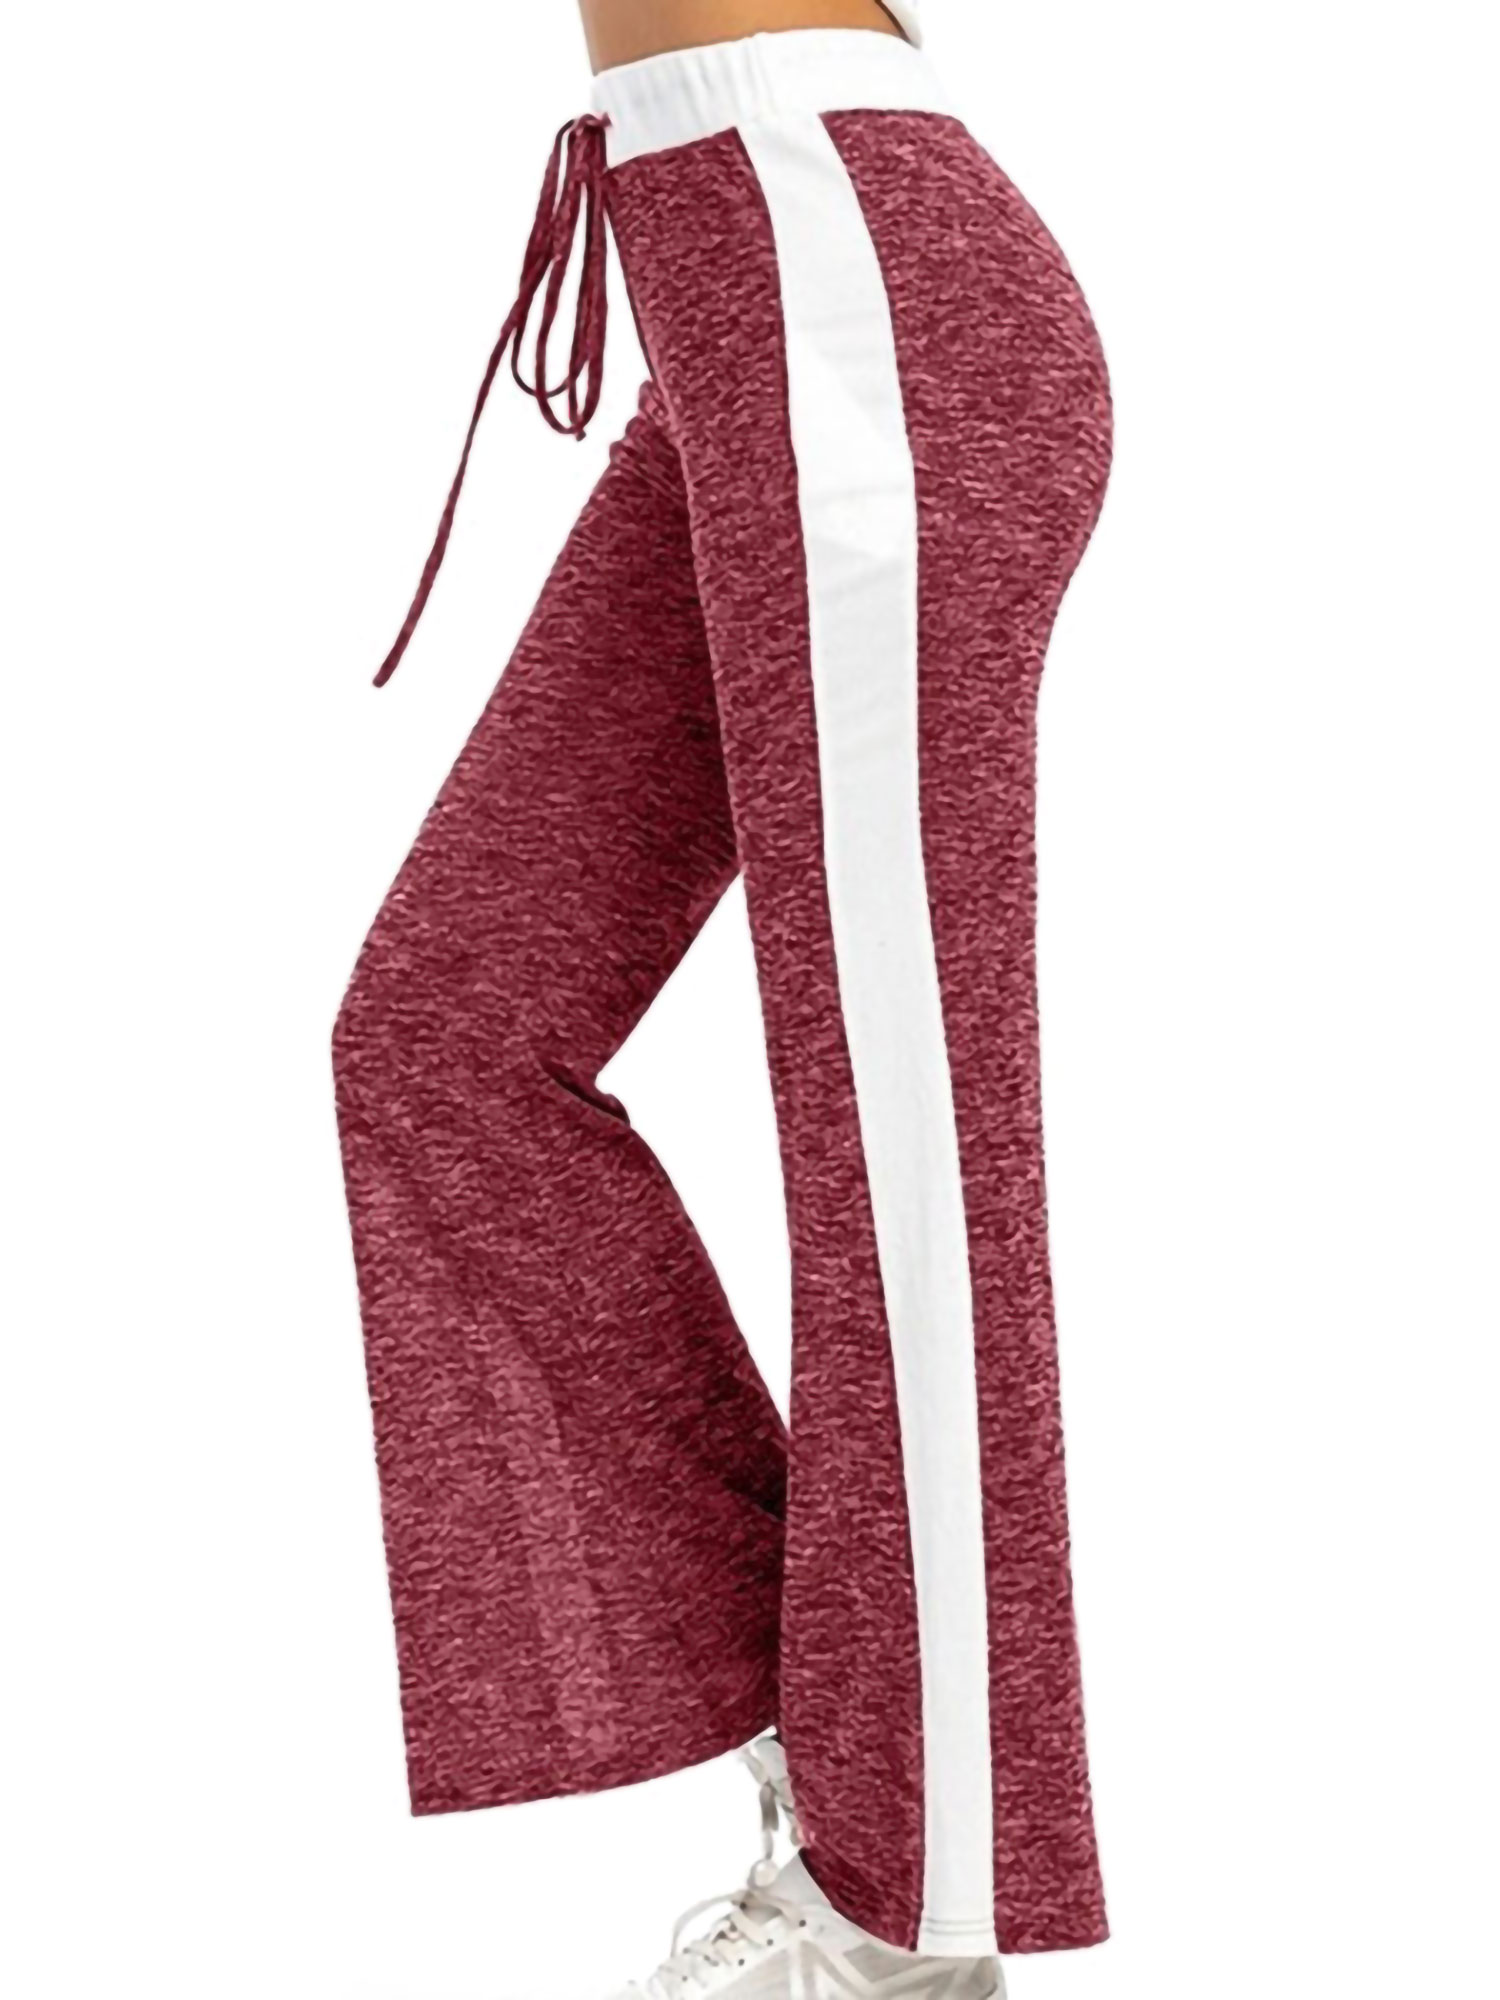 Womens Casual Flare Yoga Pants Lounge Pants Sports Sweatpants High Waist Capris - image 1 of 2